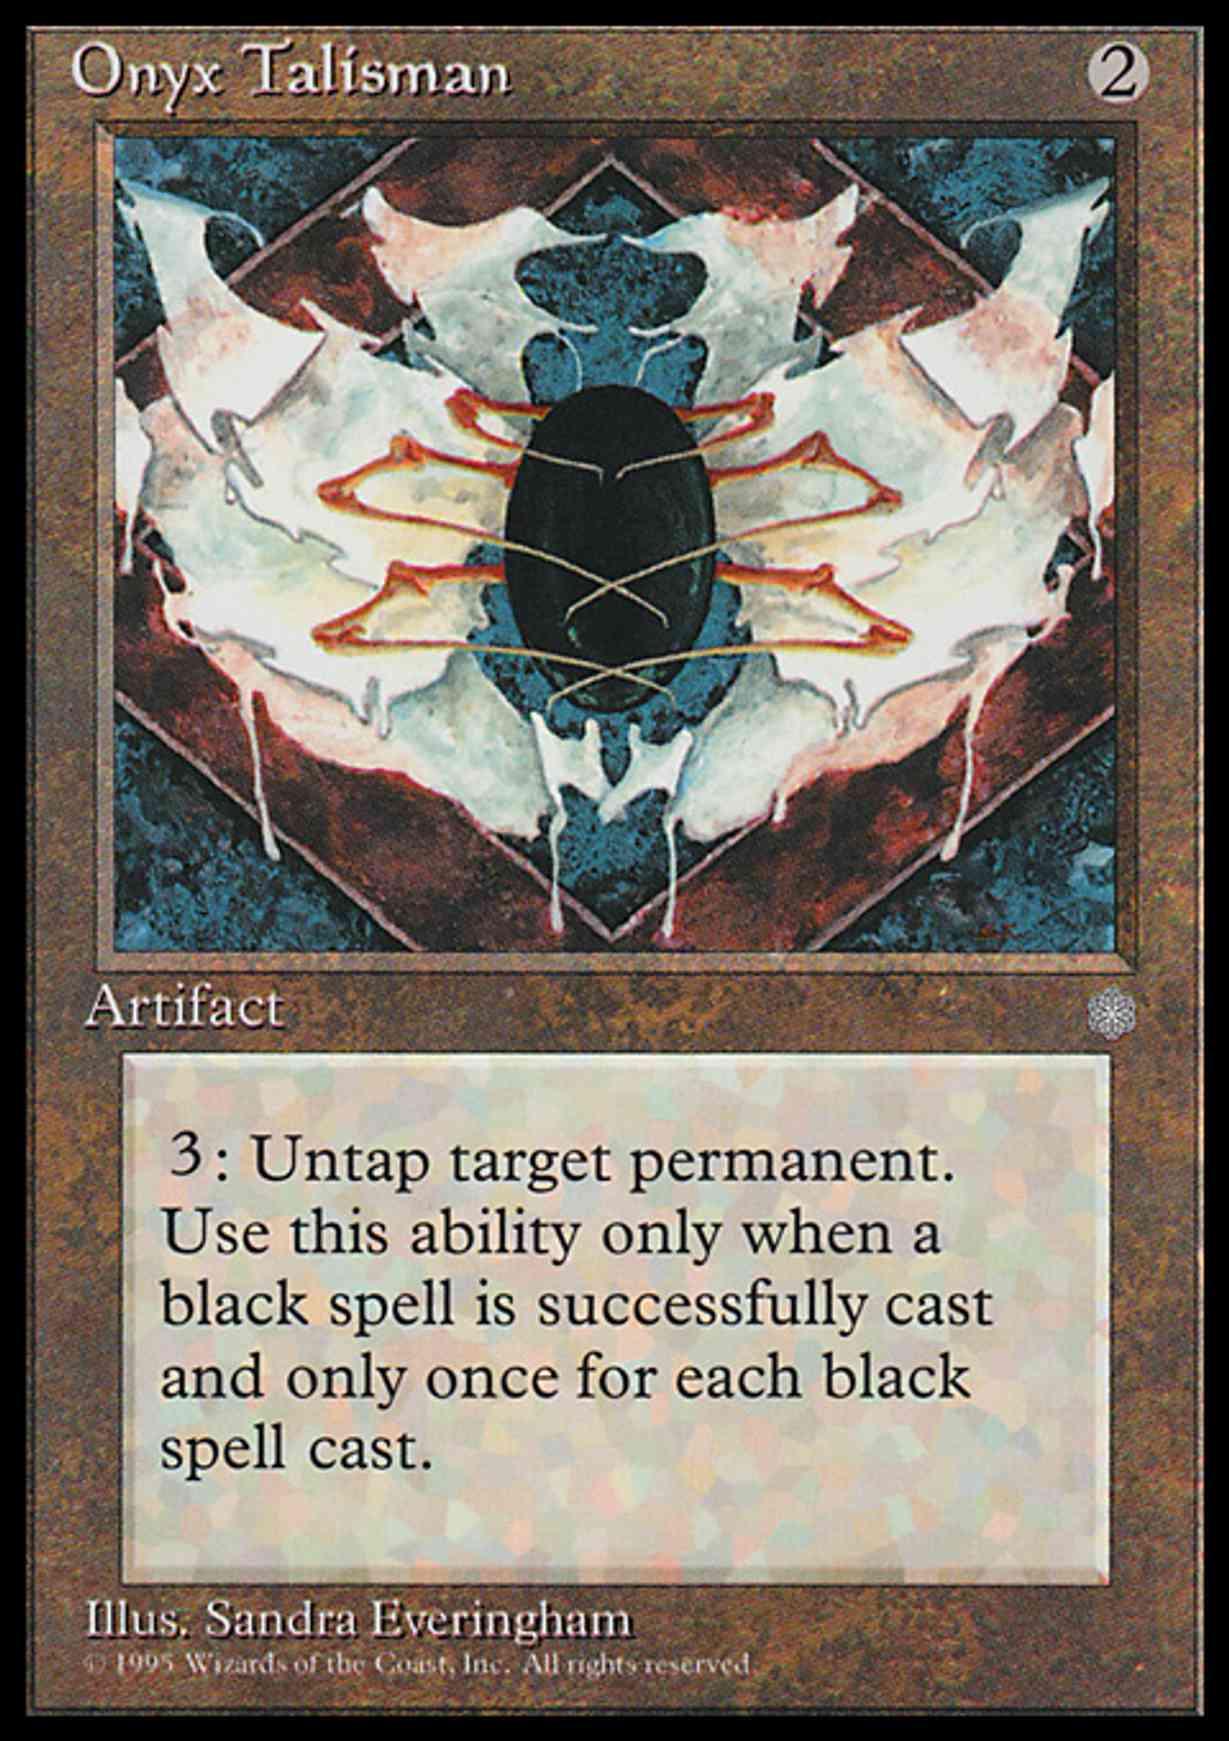 Onyx Talisman magic card front